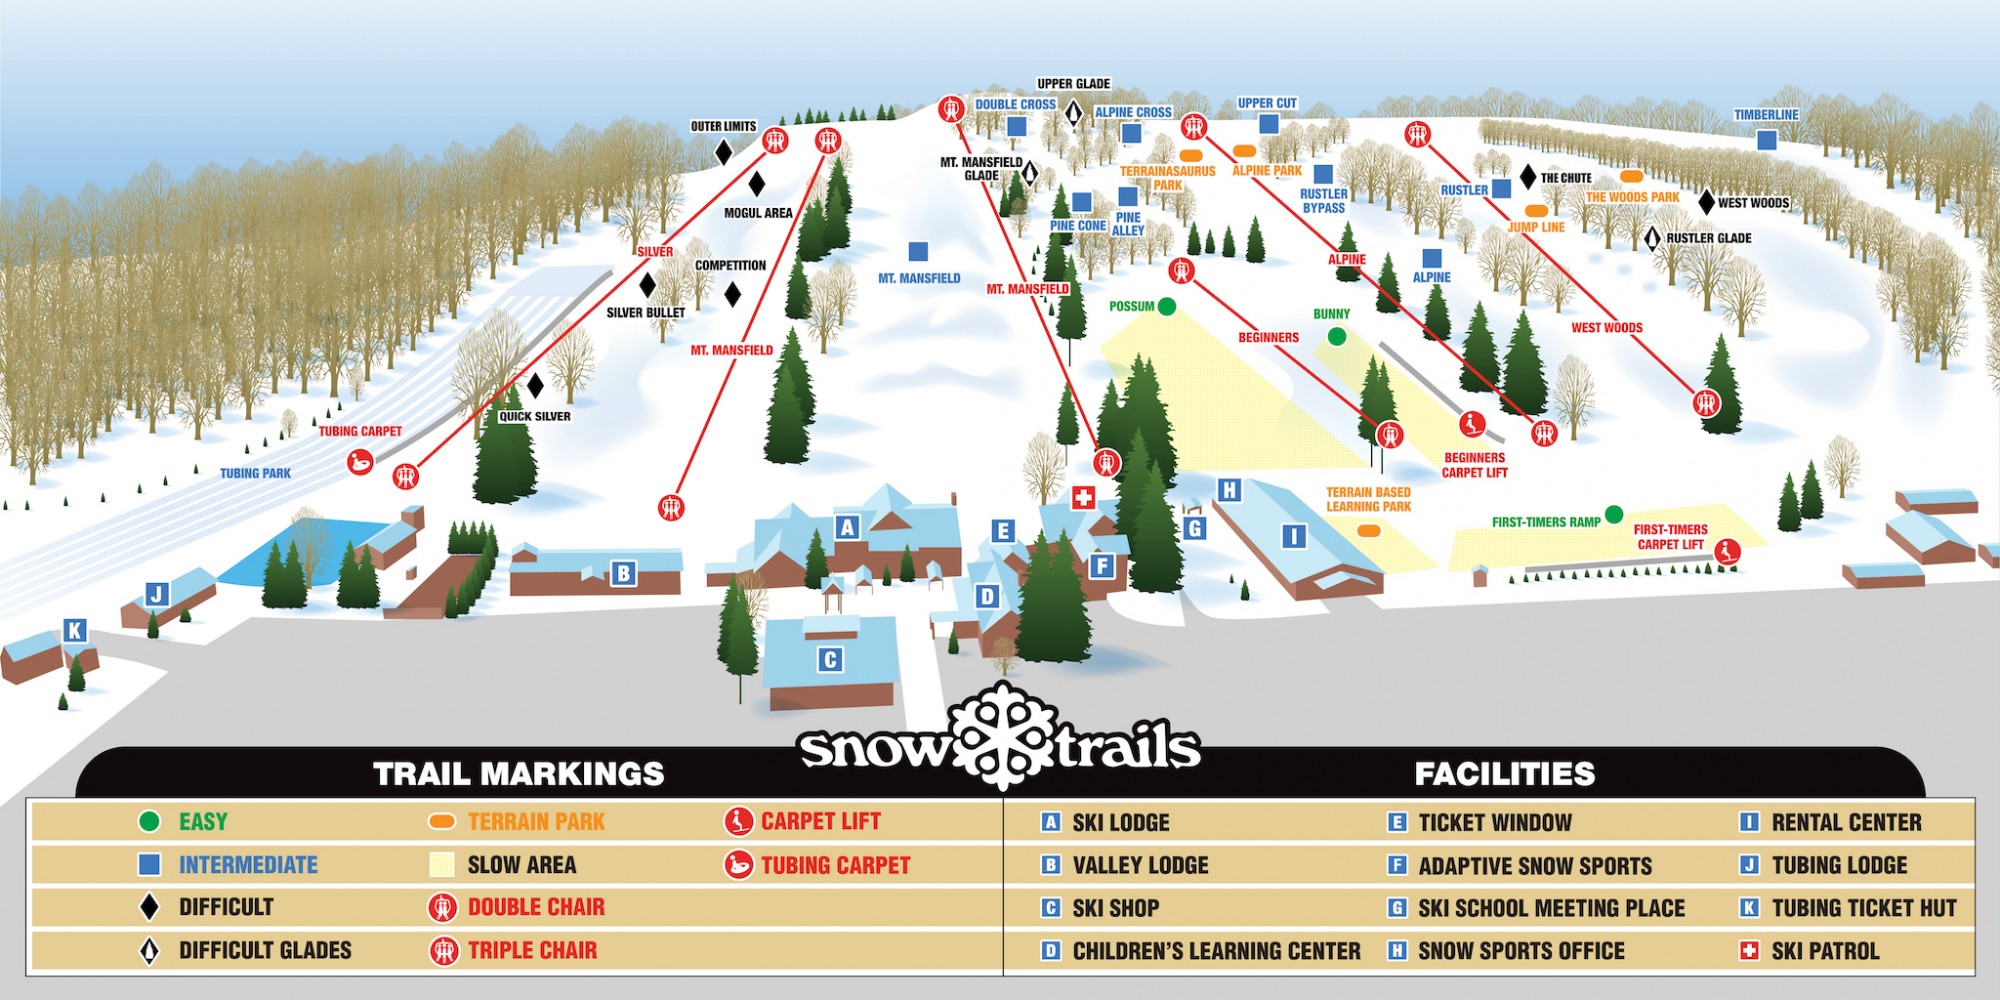 Snow Trails Map 2021-22